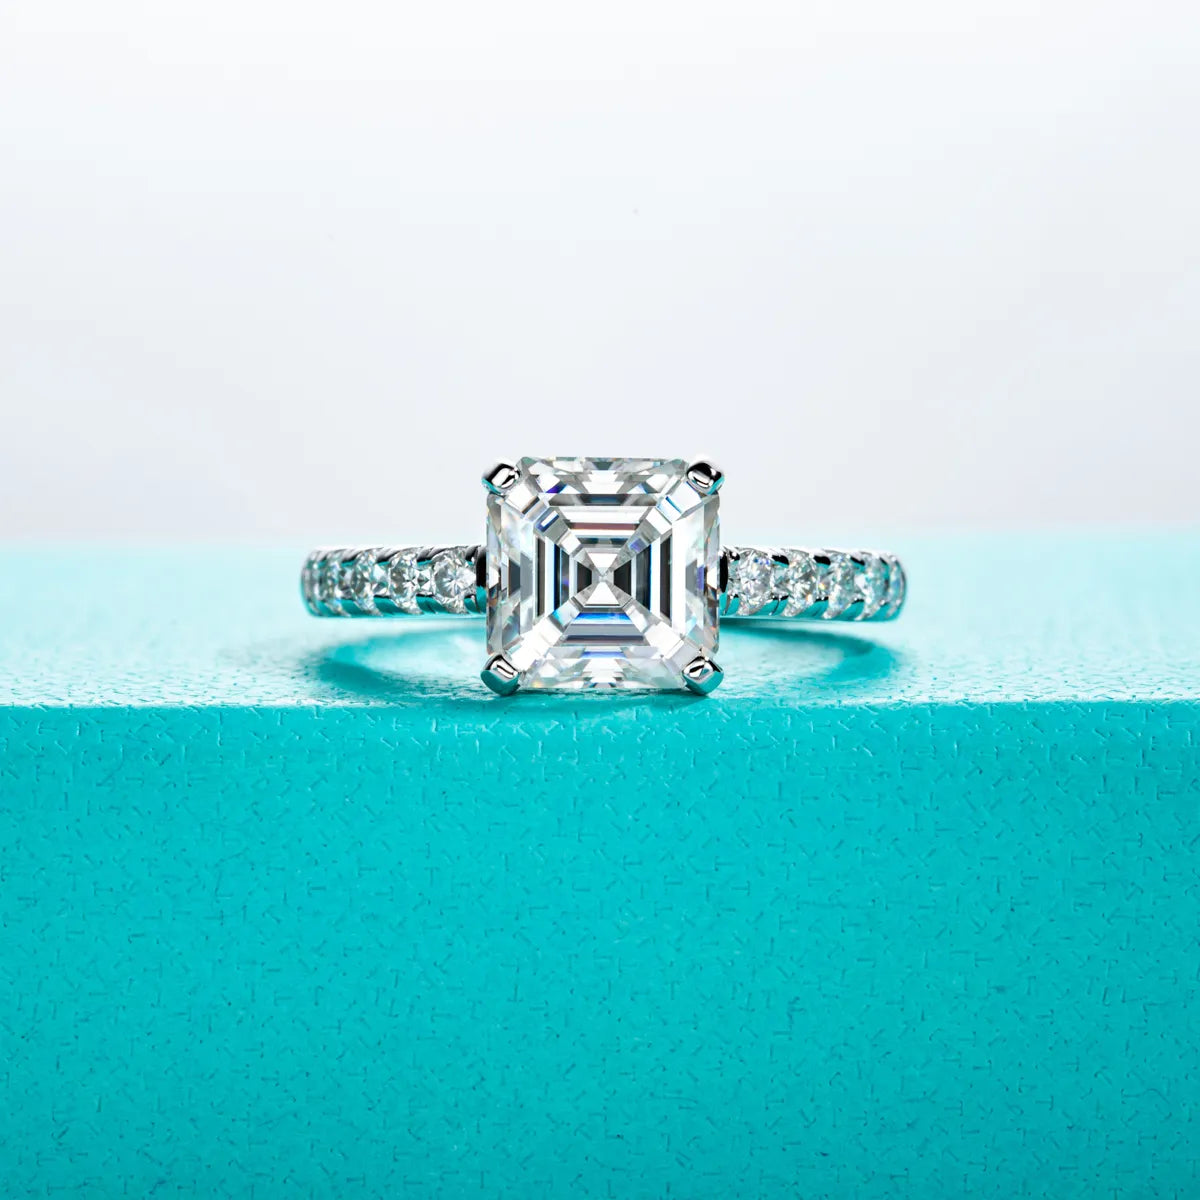 3ct Asscher Cut Moissanite Diamond Engagement Ring Sterling Silver